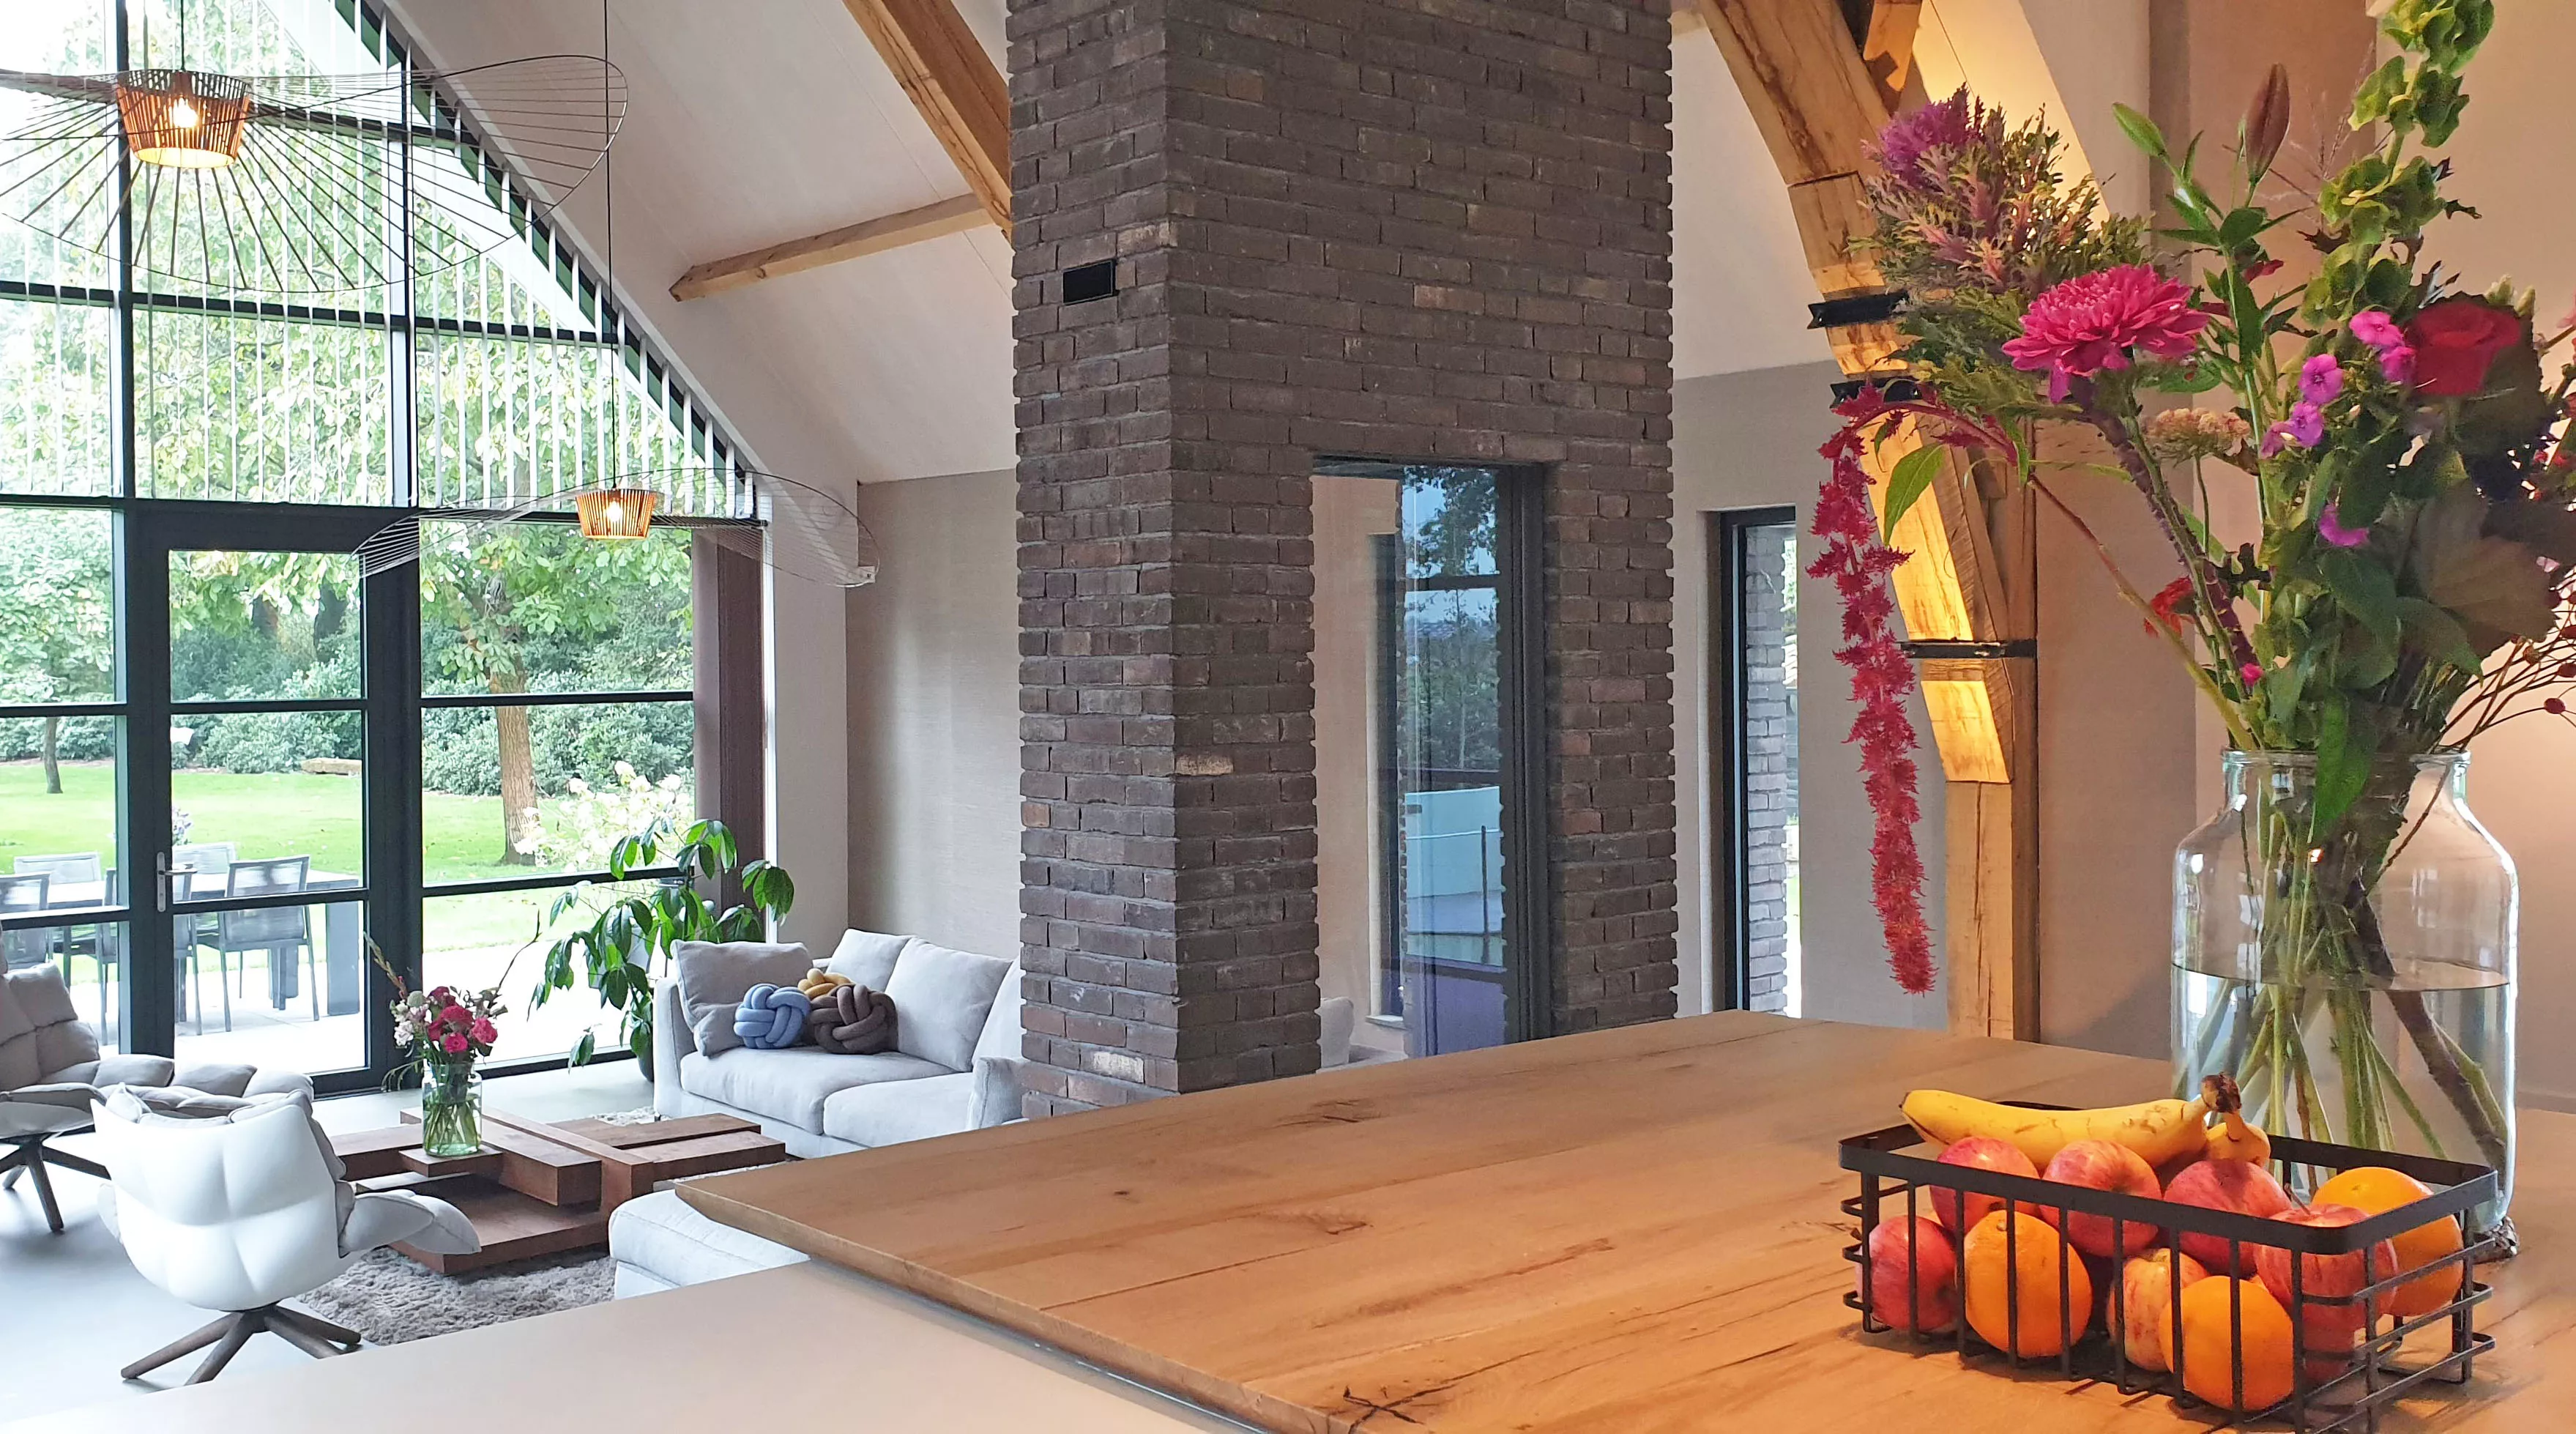 HIMACS brings contemporary cool to a rural Netherlands villa